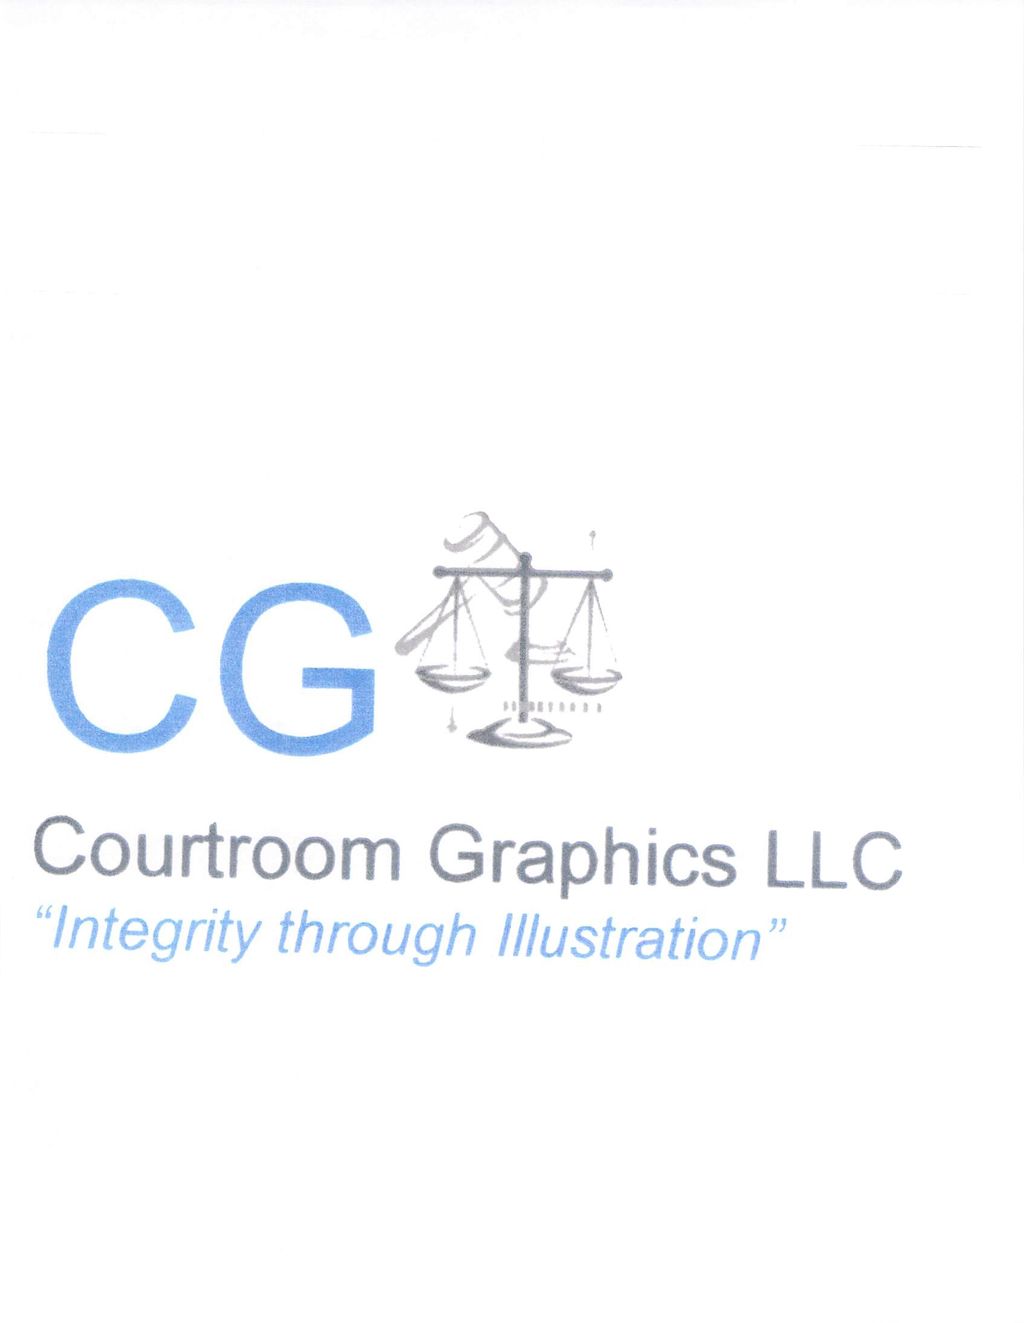 Courtroom Graphics LLC